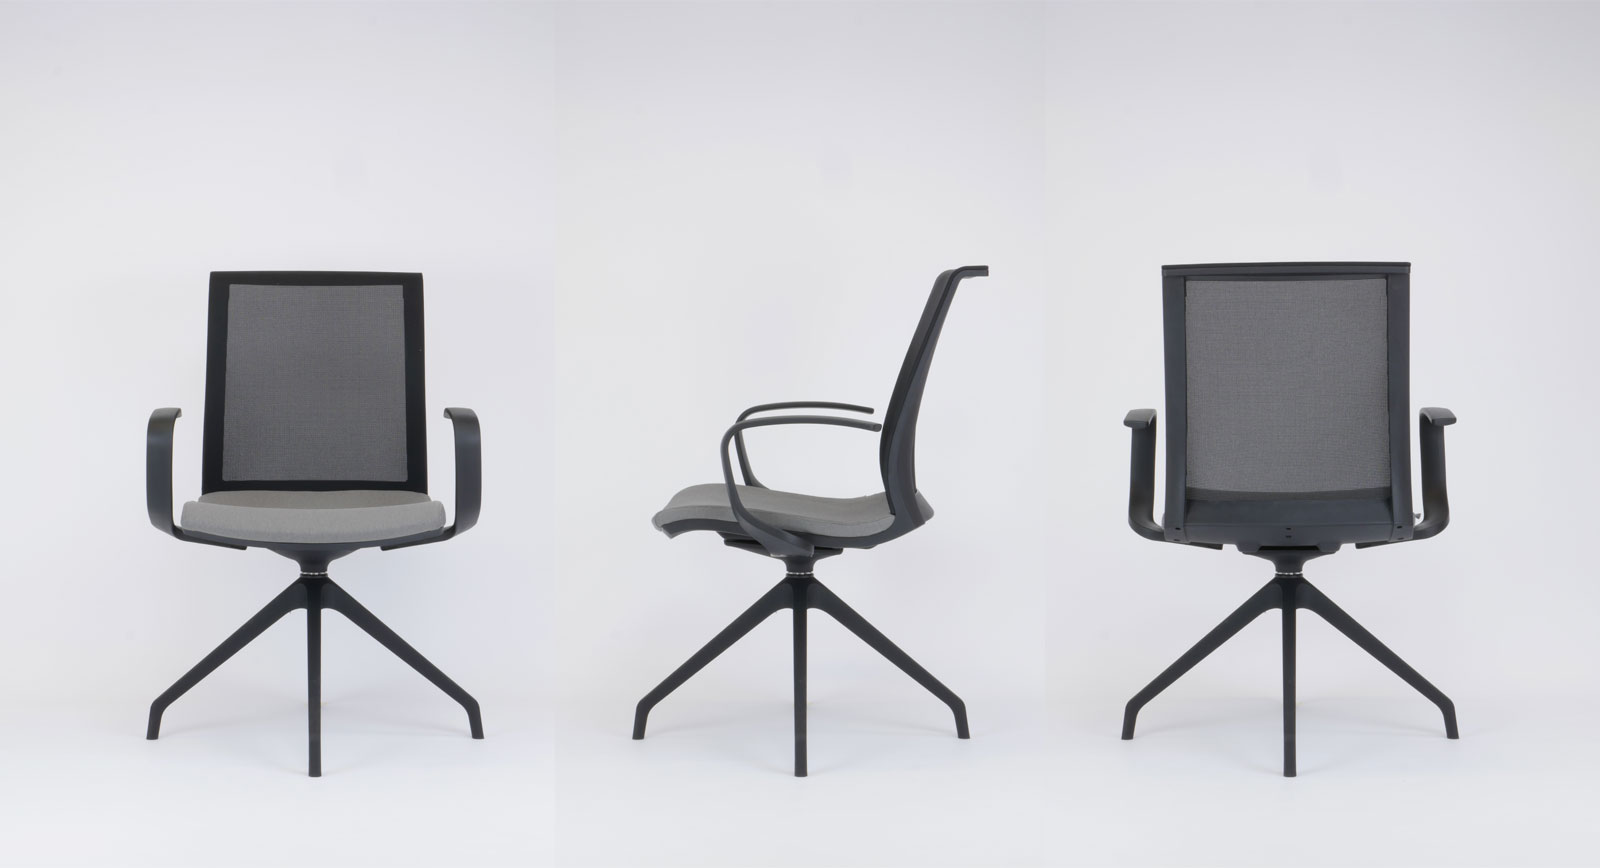 Prague sleek black meeting chair with optional slimline armrests